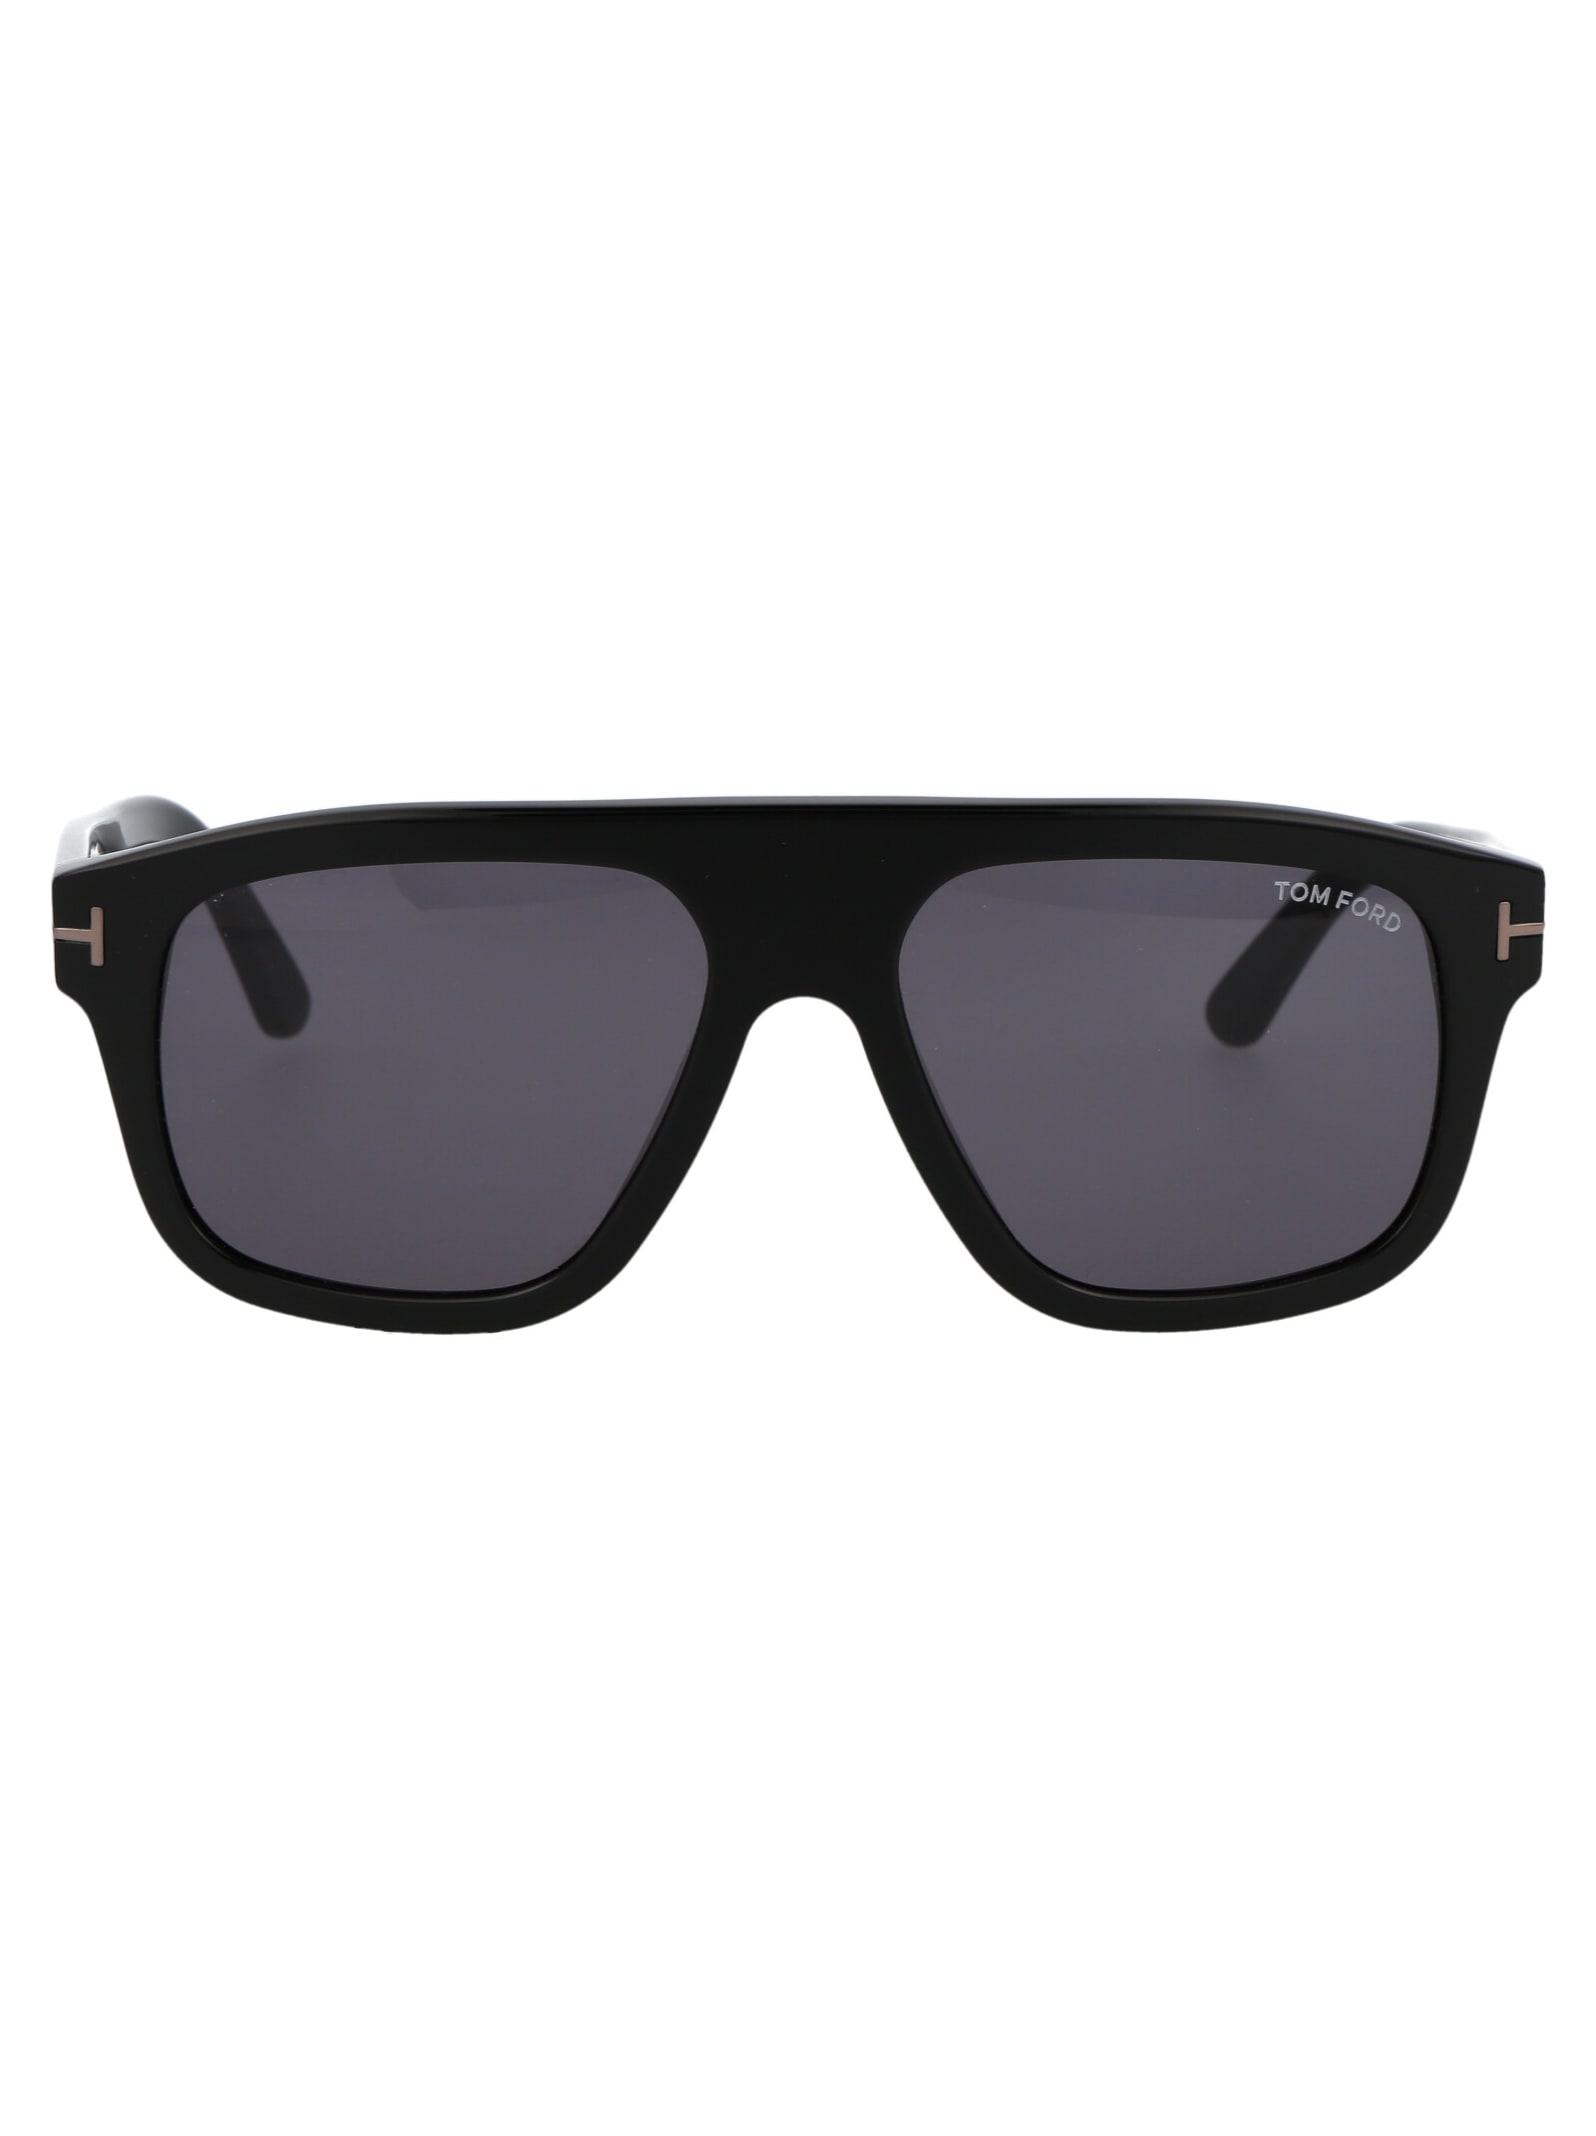 Tom Ford Eyewear Ft0777-n Sunglasses